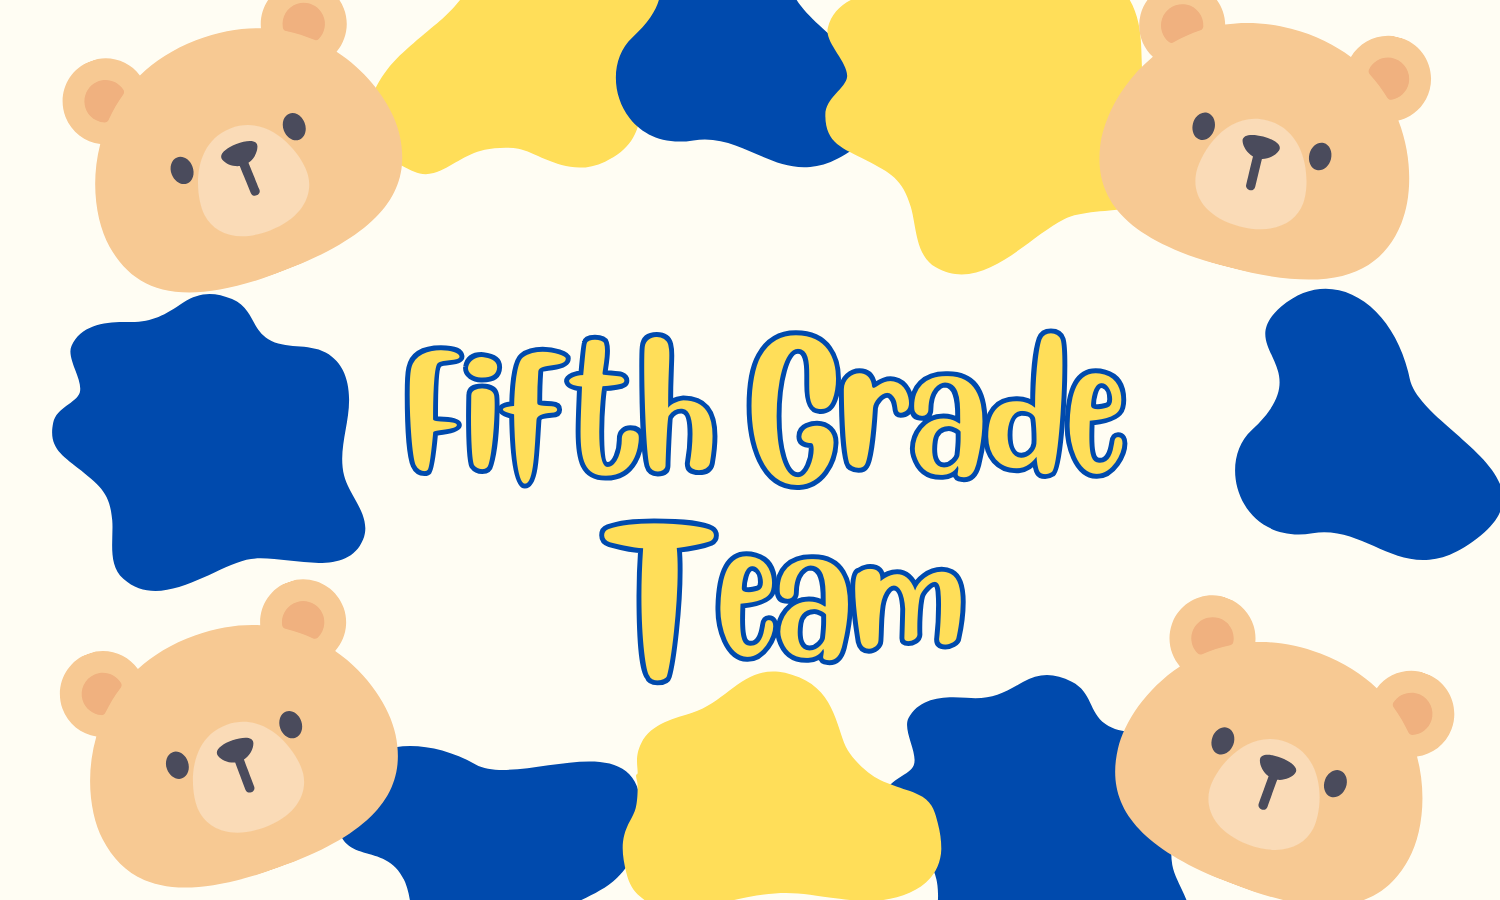 Fifth Grade Team Image Title